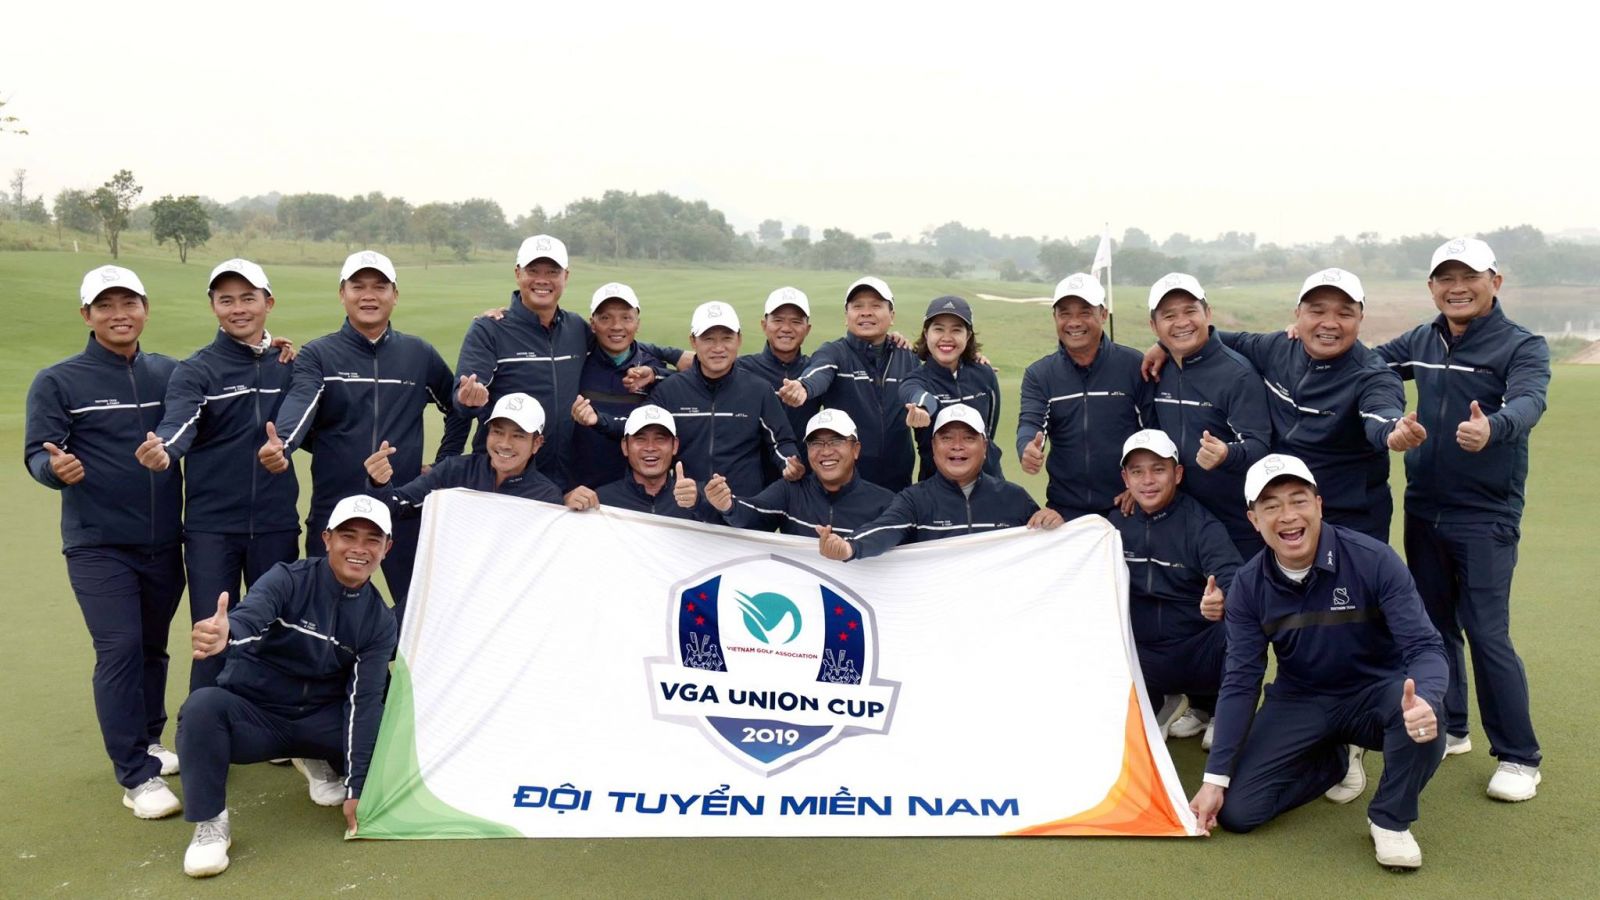 Nhiều tuyển thủ VGA Union Cup miền Nam dự giải VPG Tour Long An